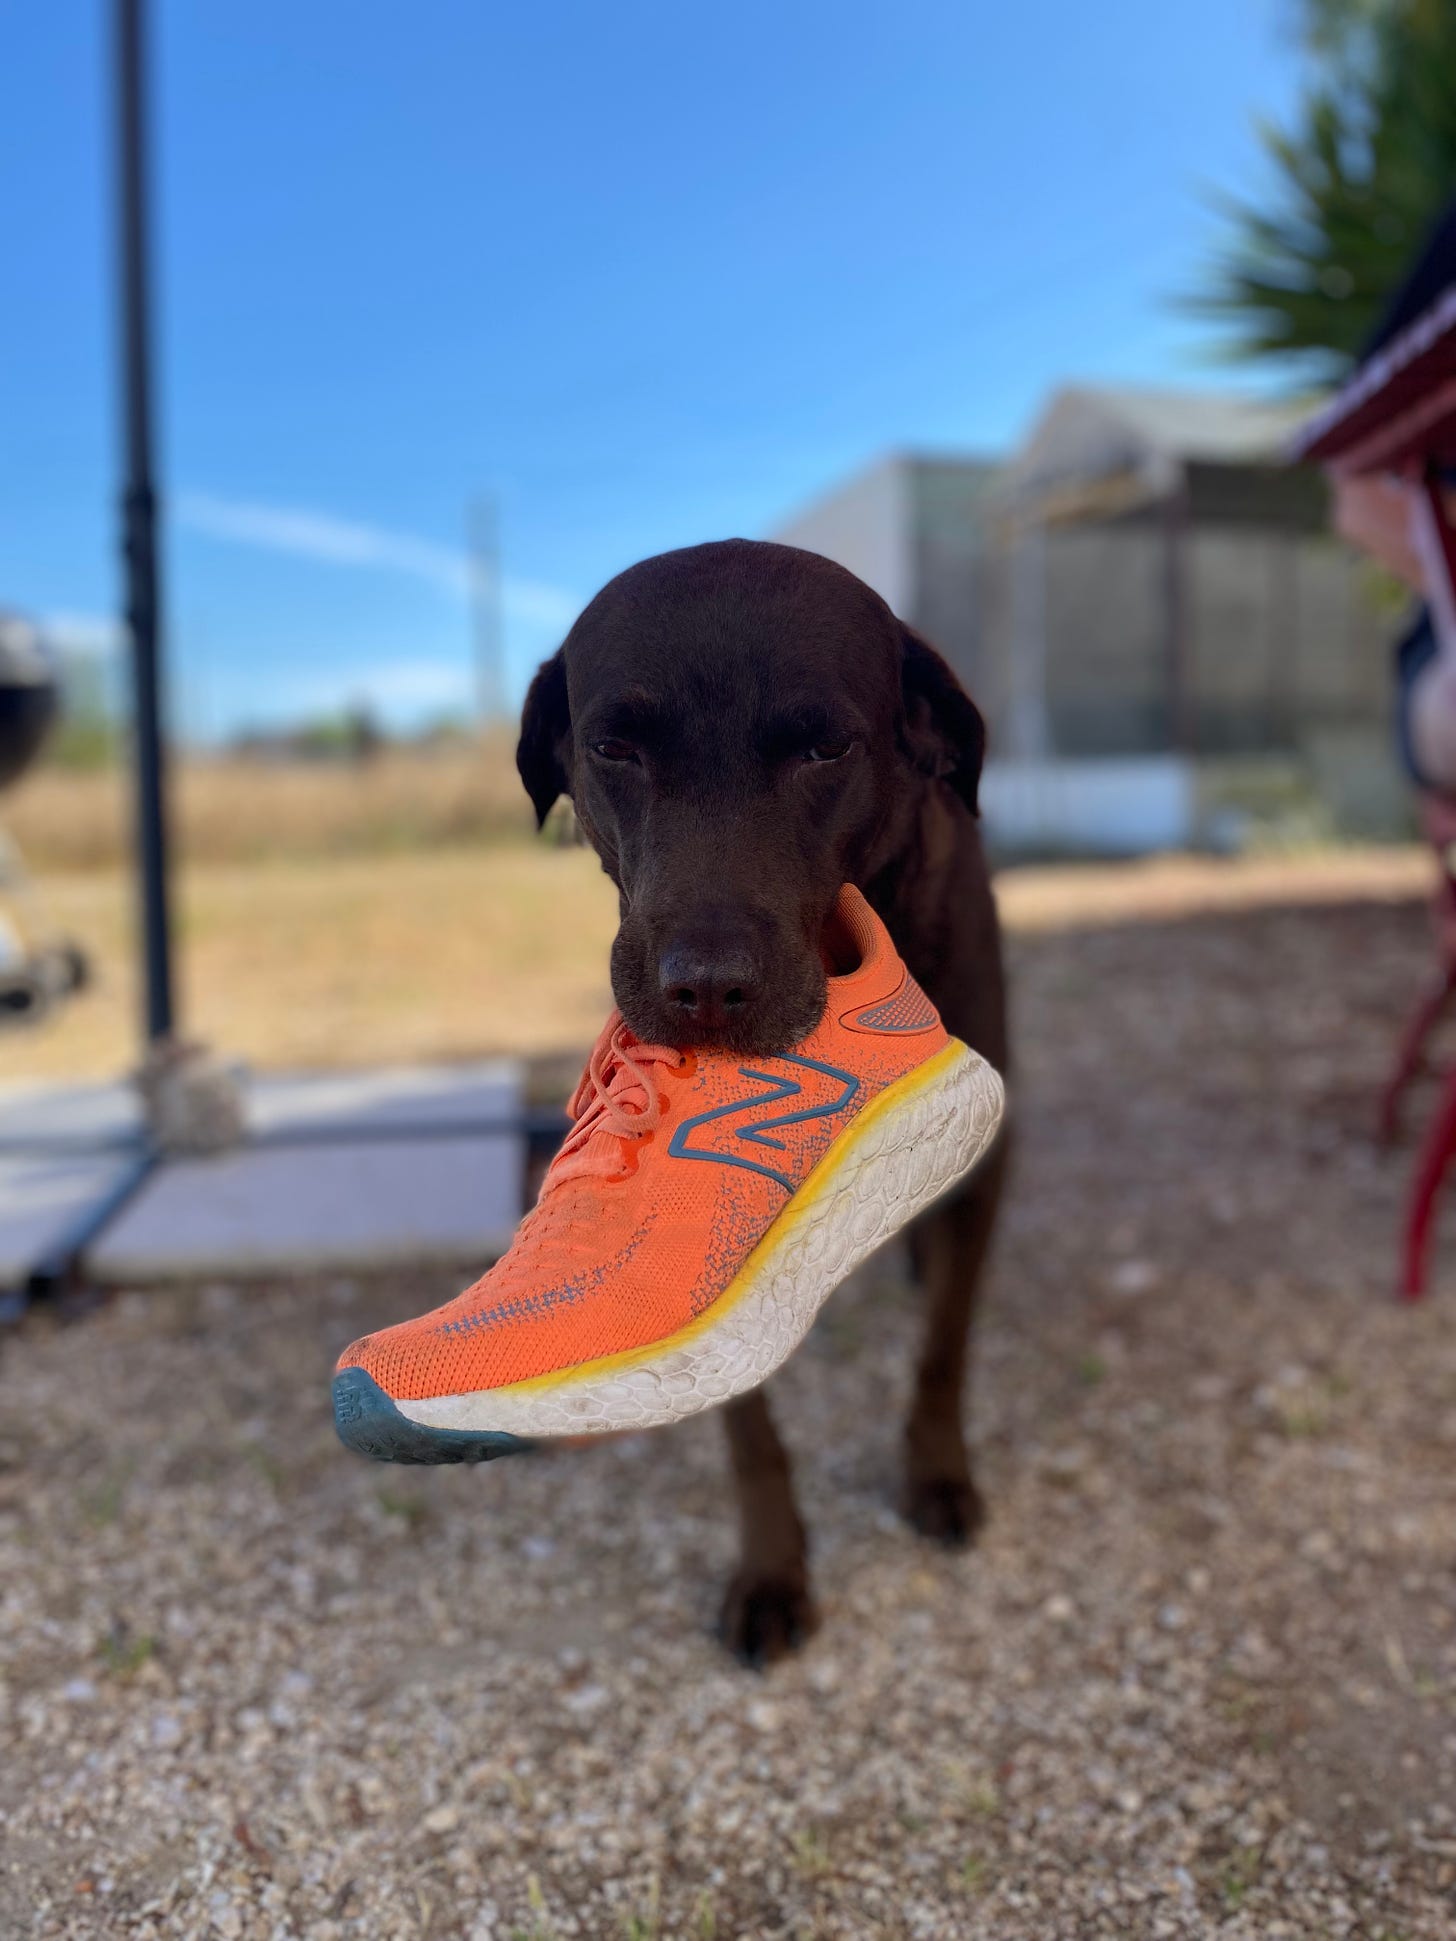 Bob (brown Labrador) carrying a training shoe